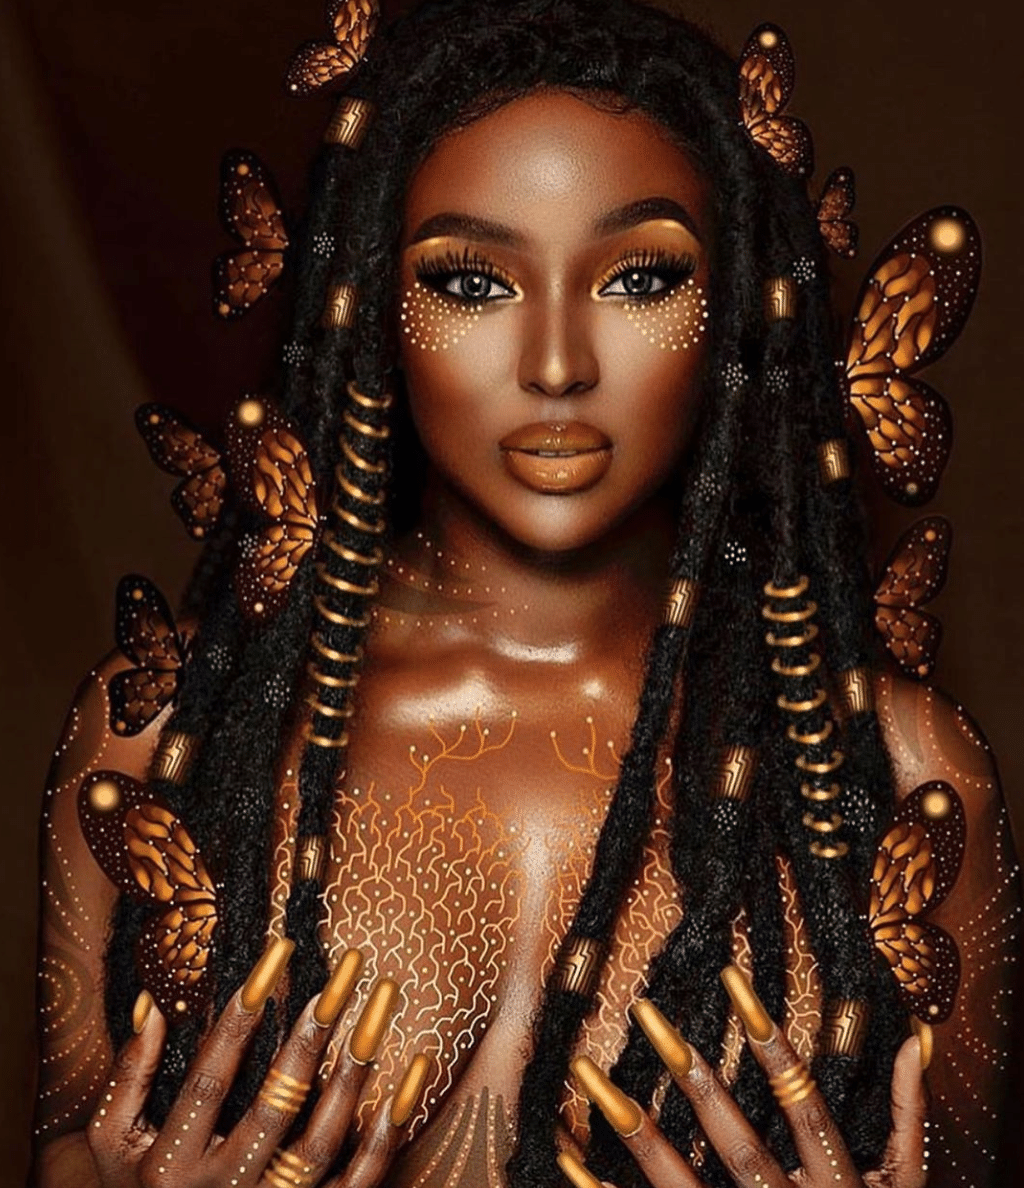 Amara La Negra Serves Up African Goddess In A New Post